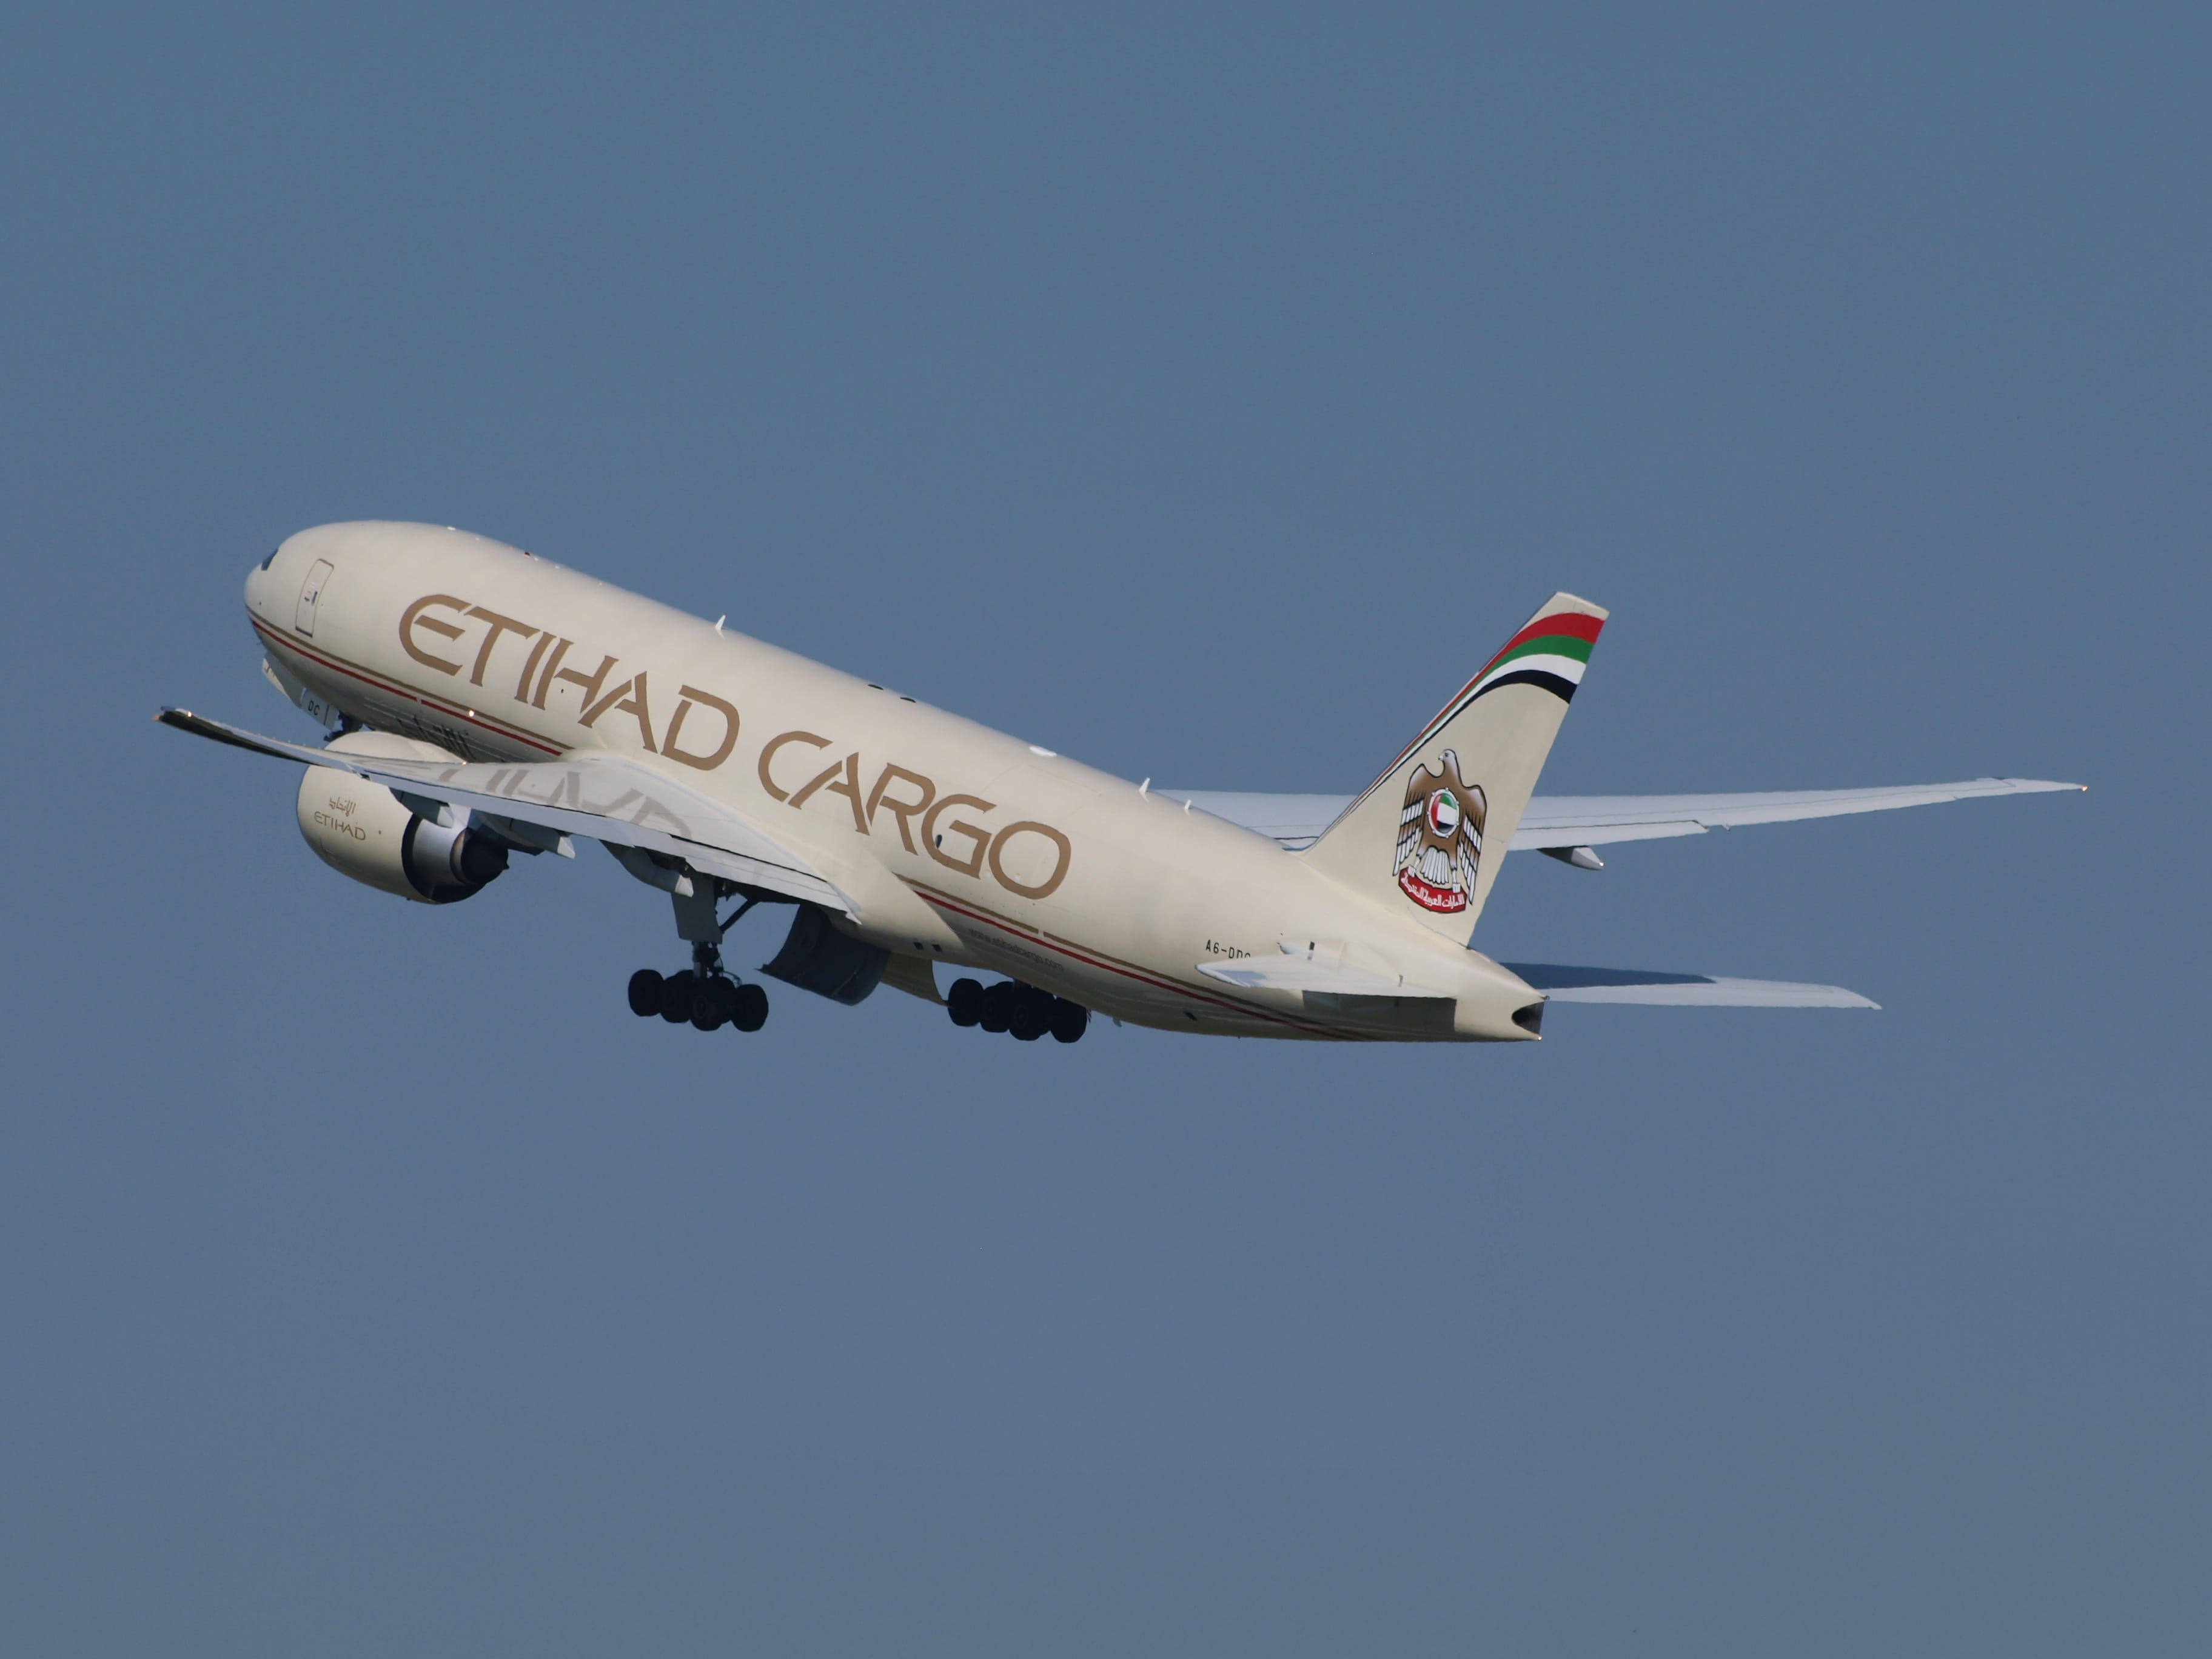 photo of white Etihad Cargo plane, Etihad Airways, Boeing 777